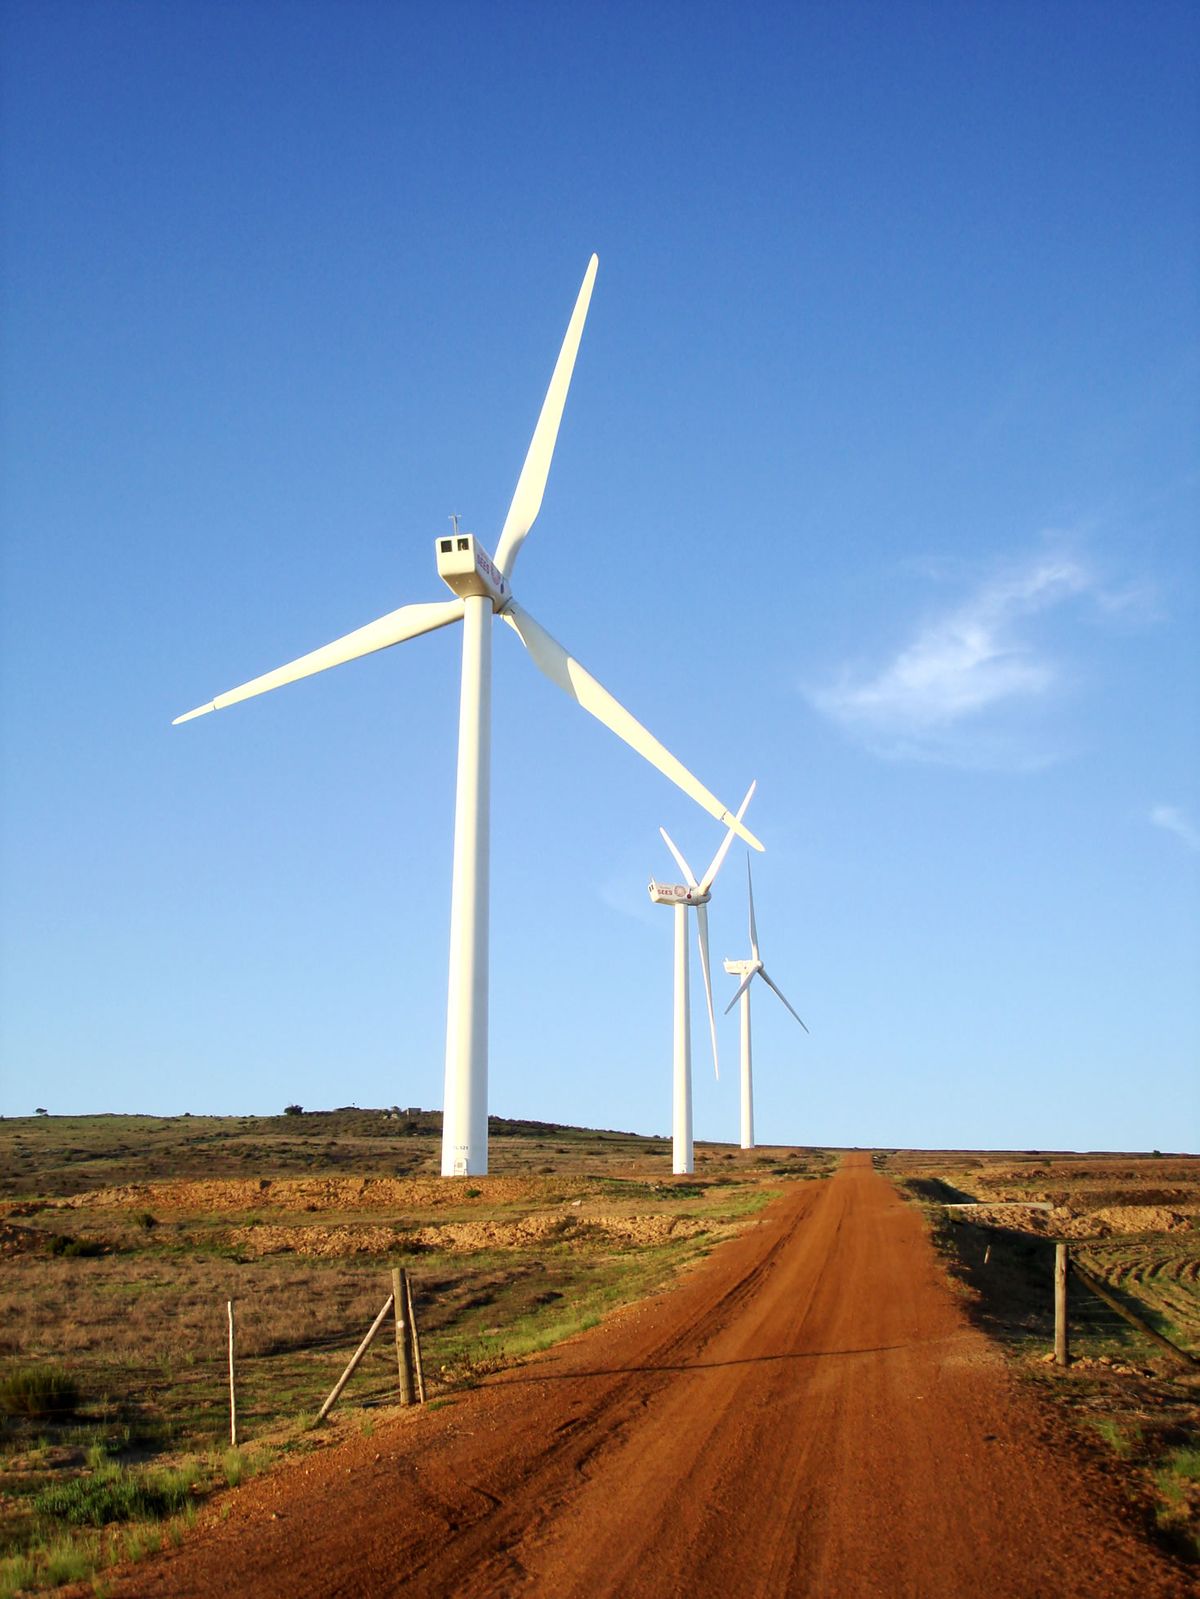 Wind power - Energy Education